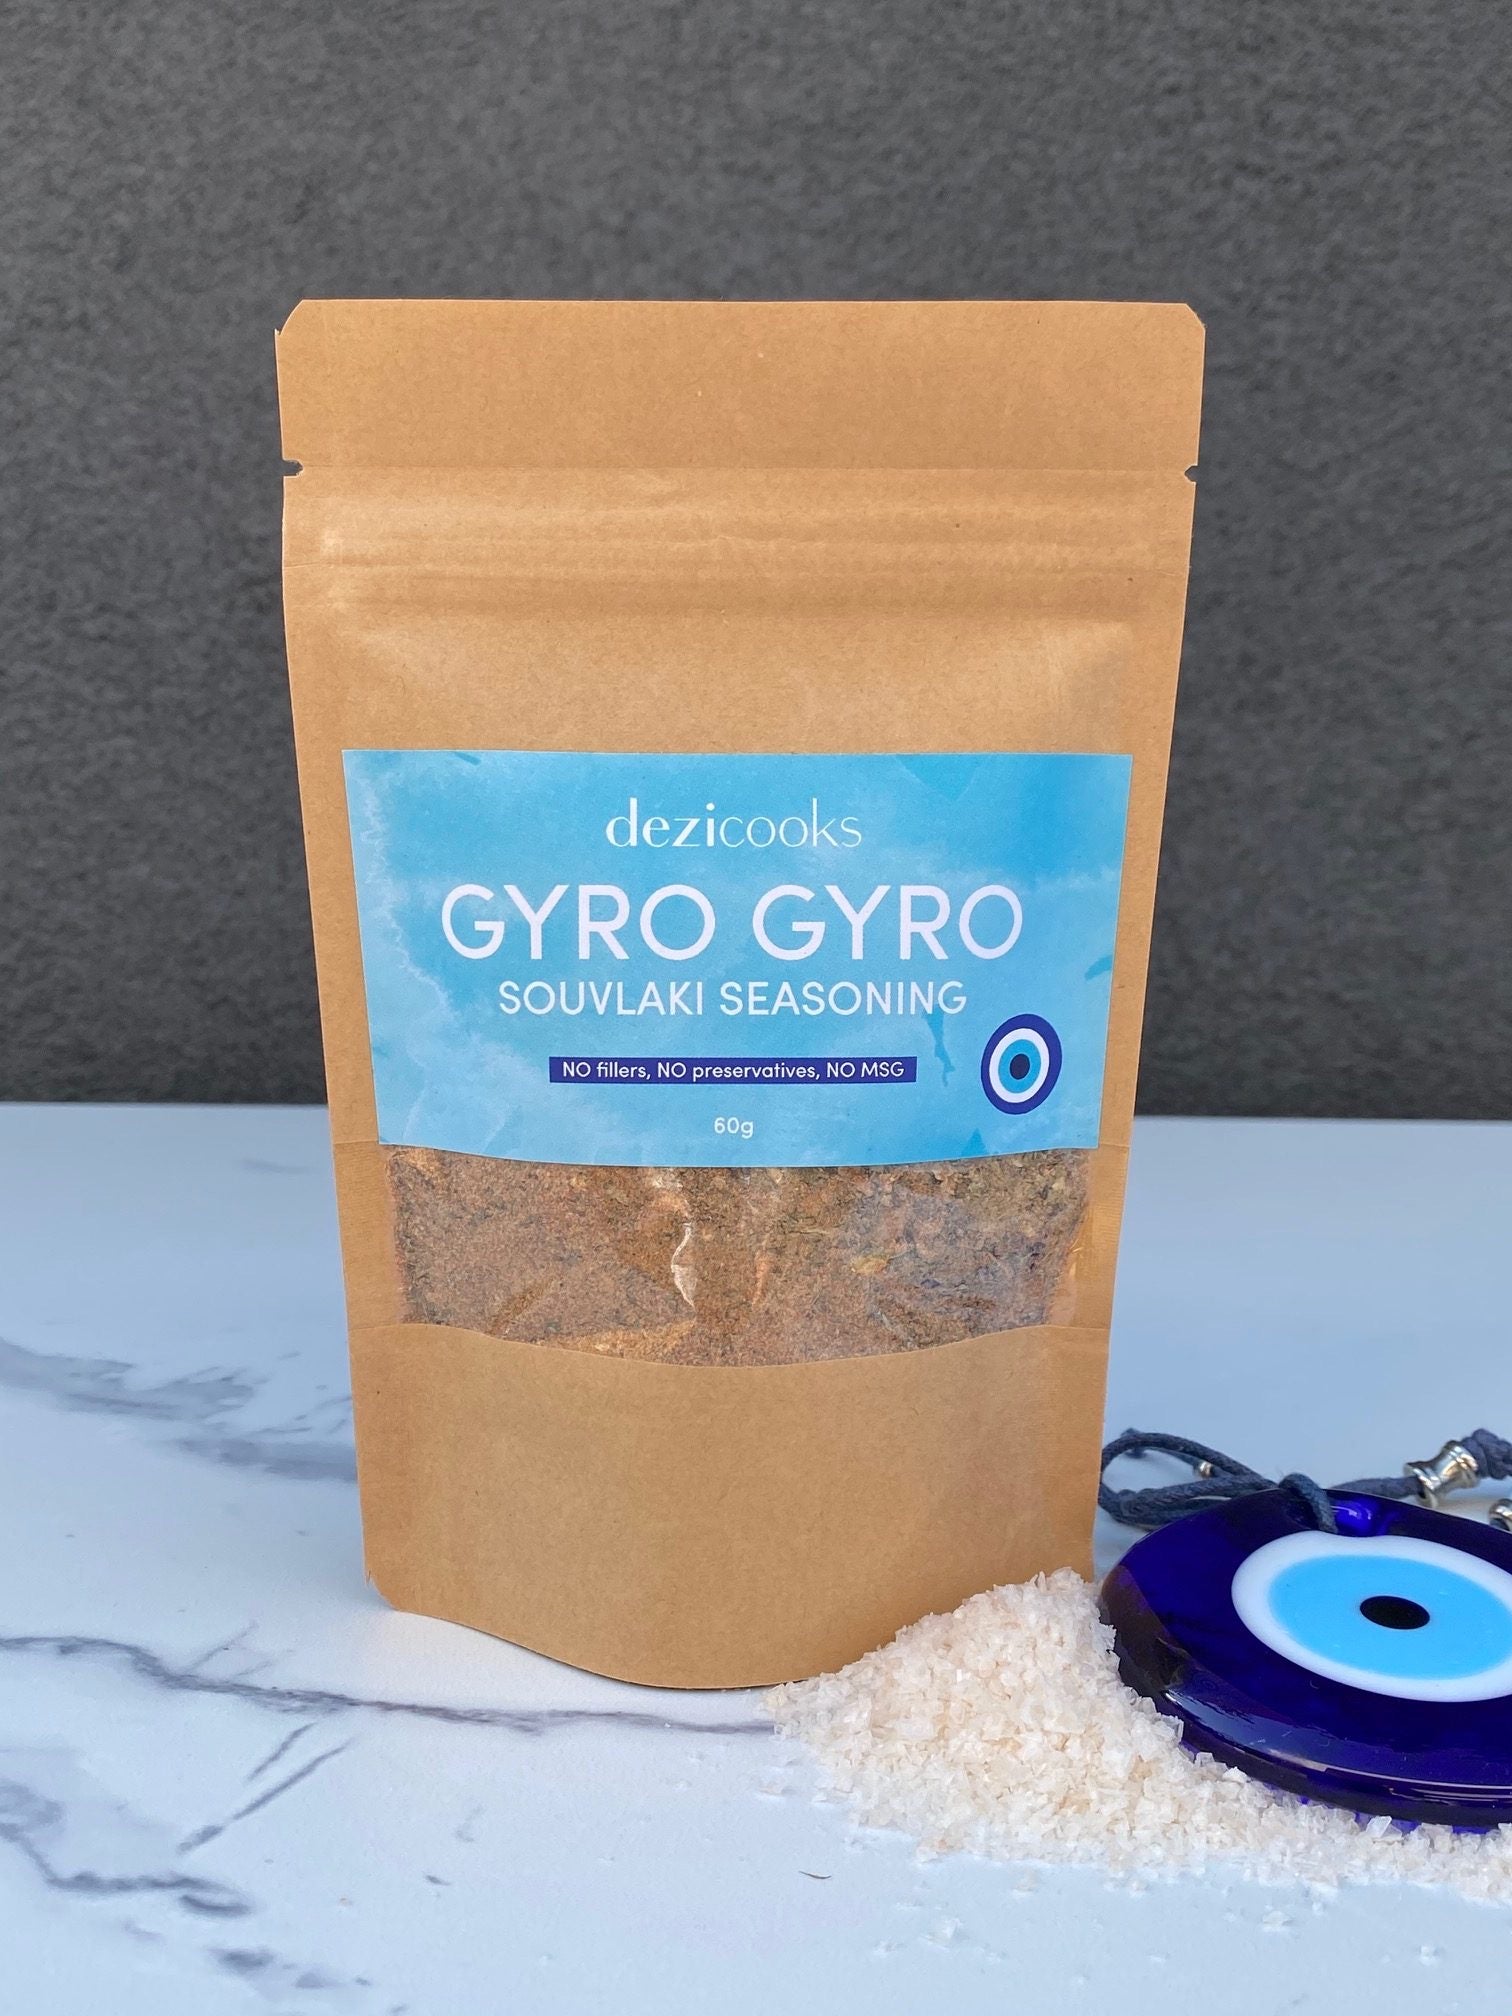 dezicooks Gyro Gyro Souvlaki Seasoning 60g